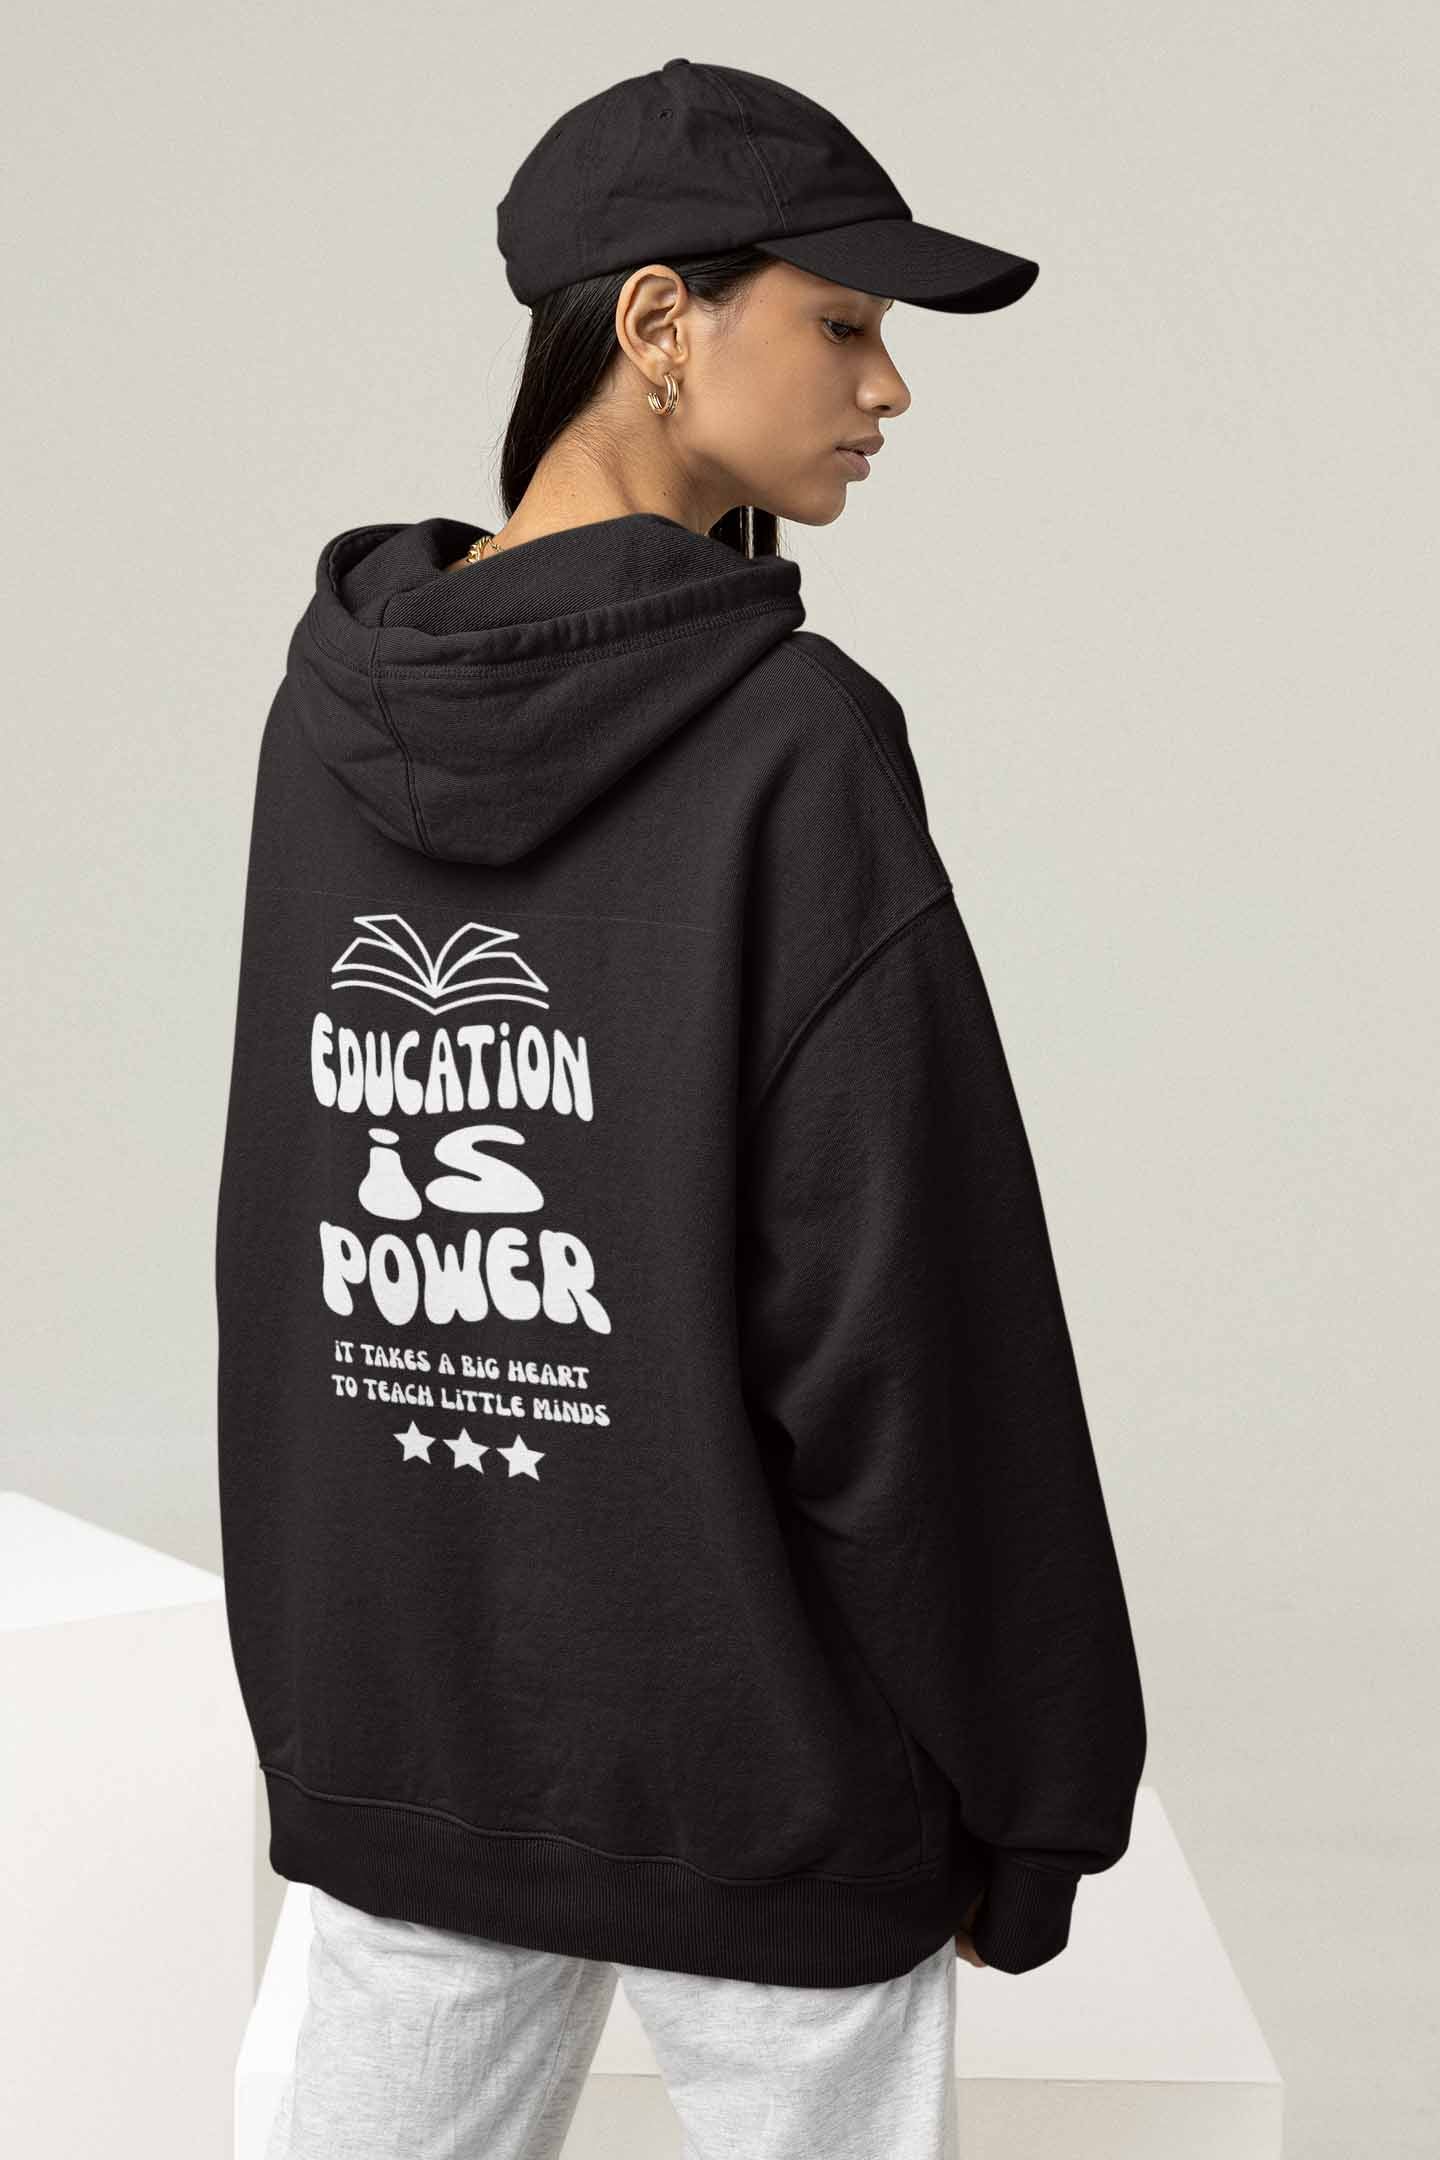 "Education is Power" Sachemii Organic Heavy Oversized Hoodie (Portugal)